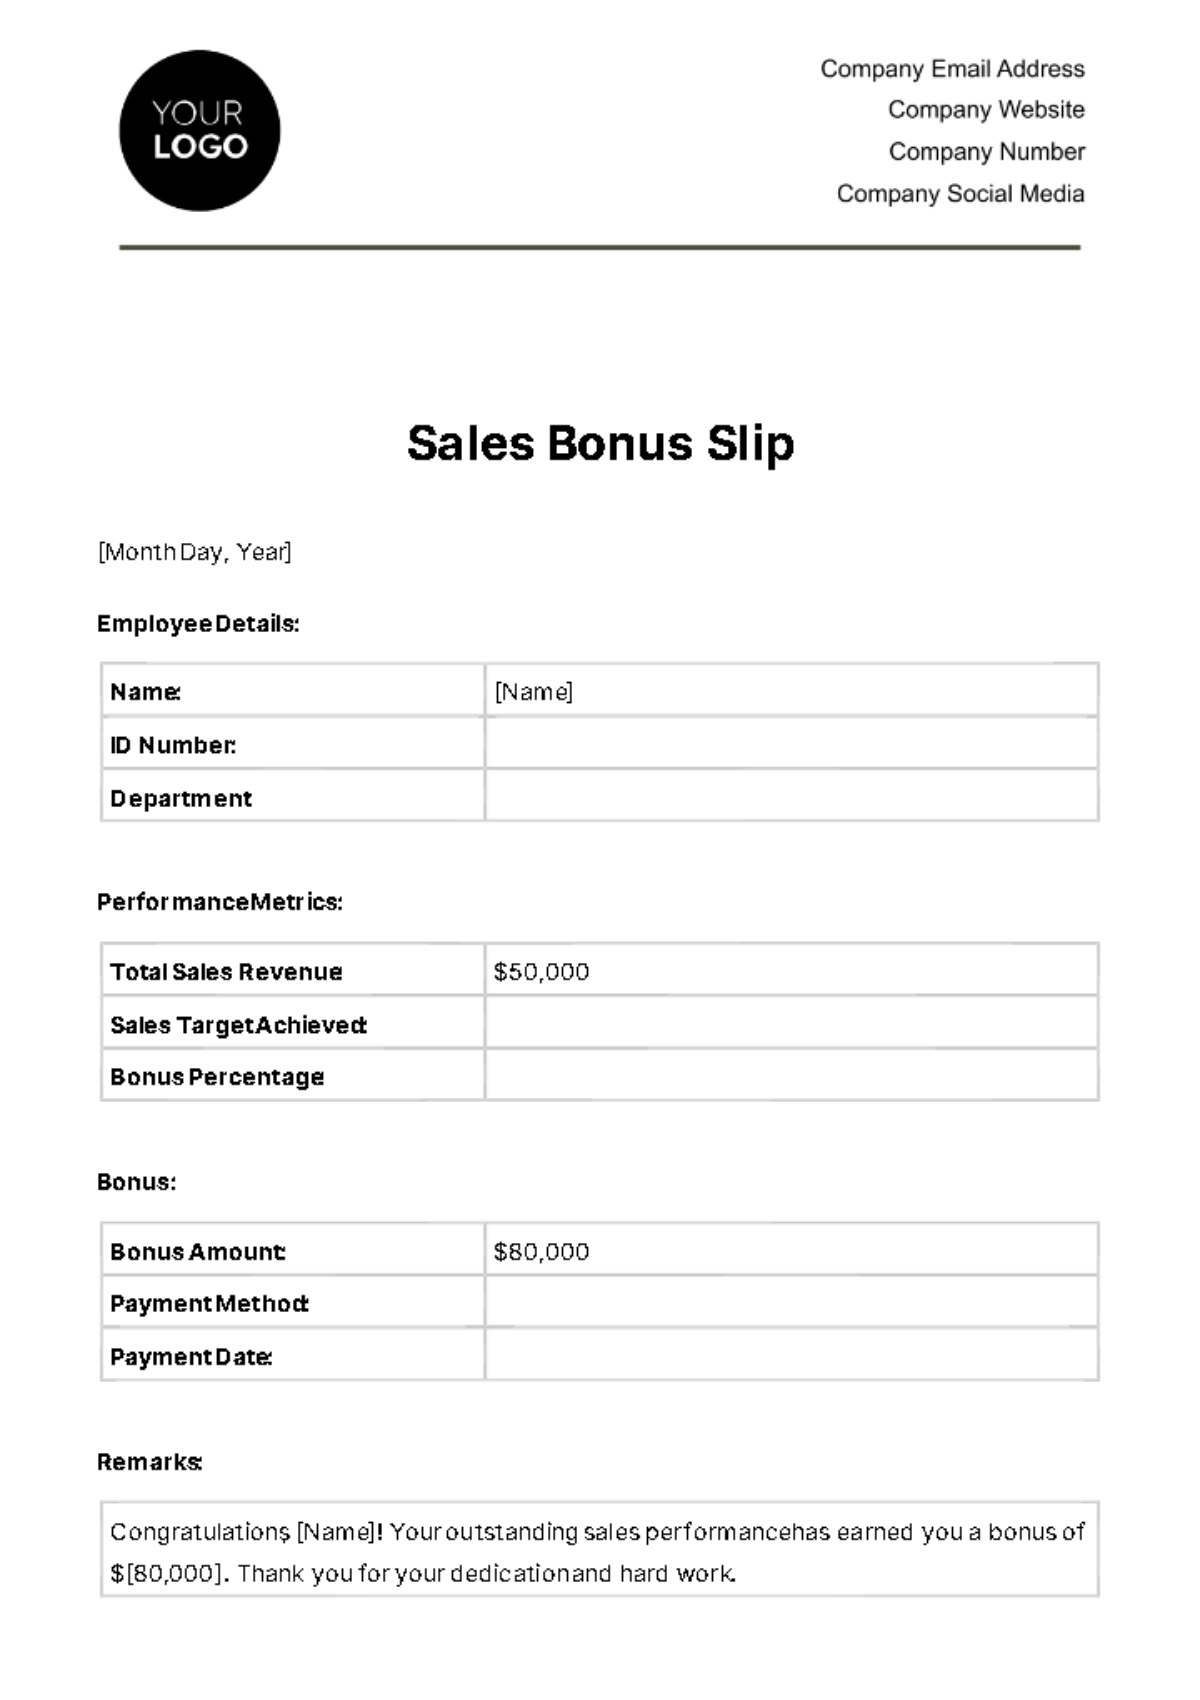 Sales Bonus Slip Template